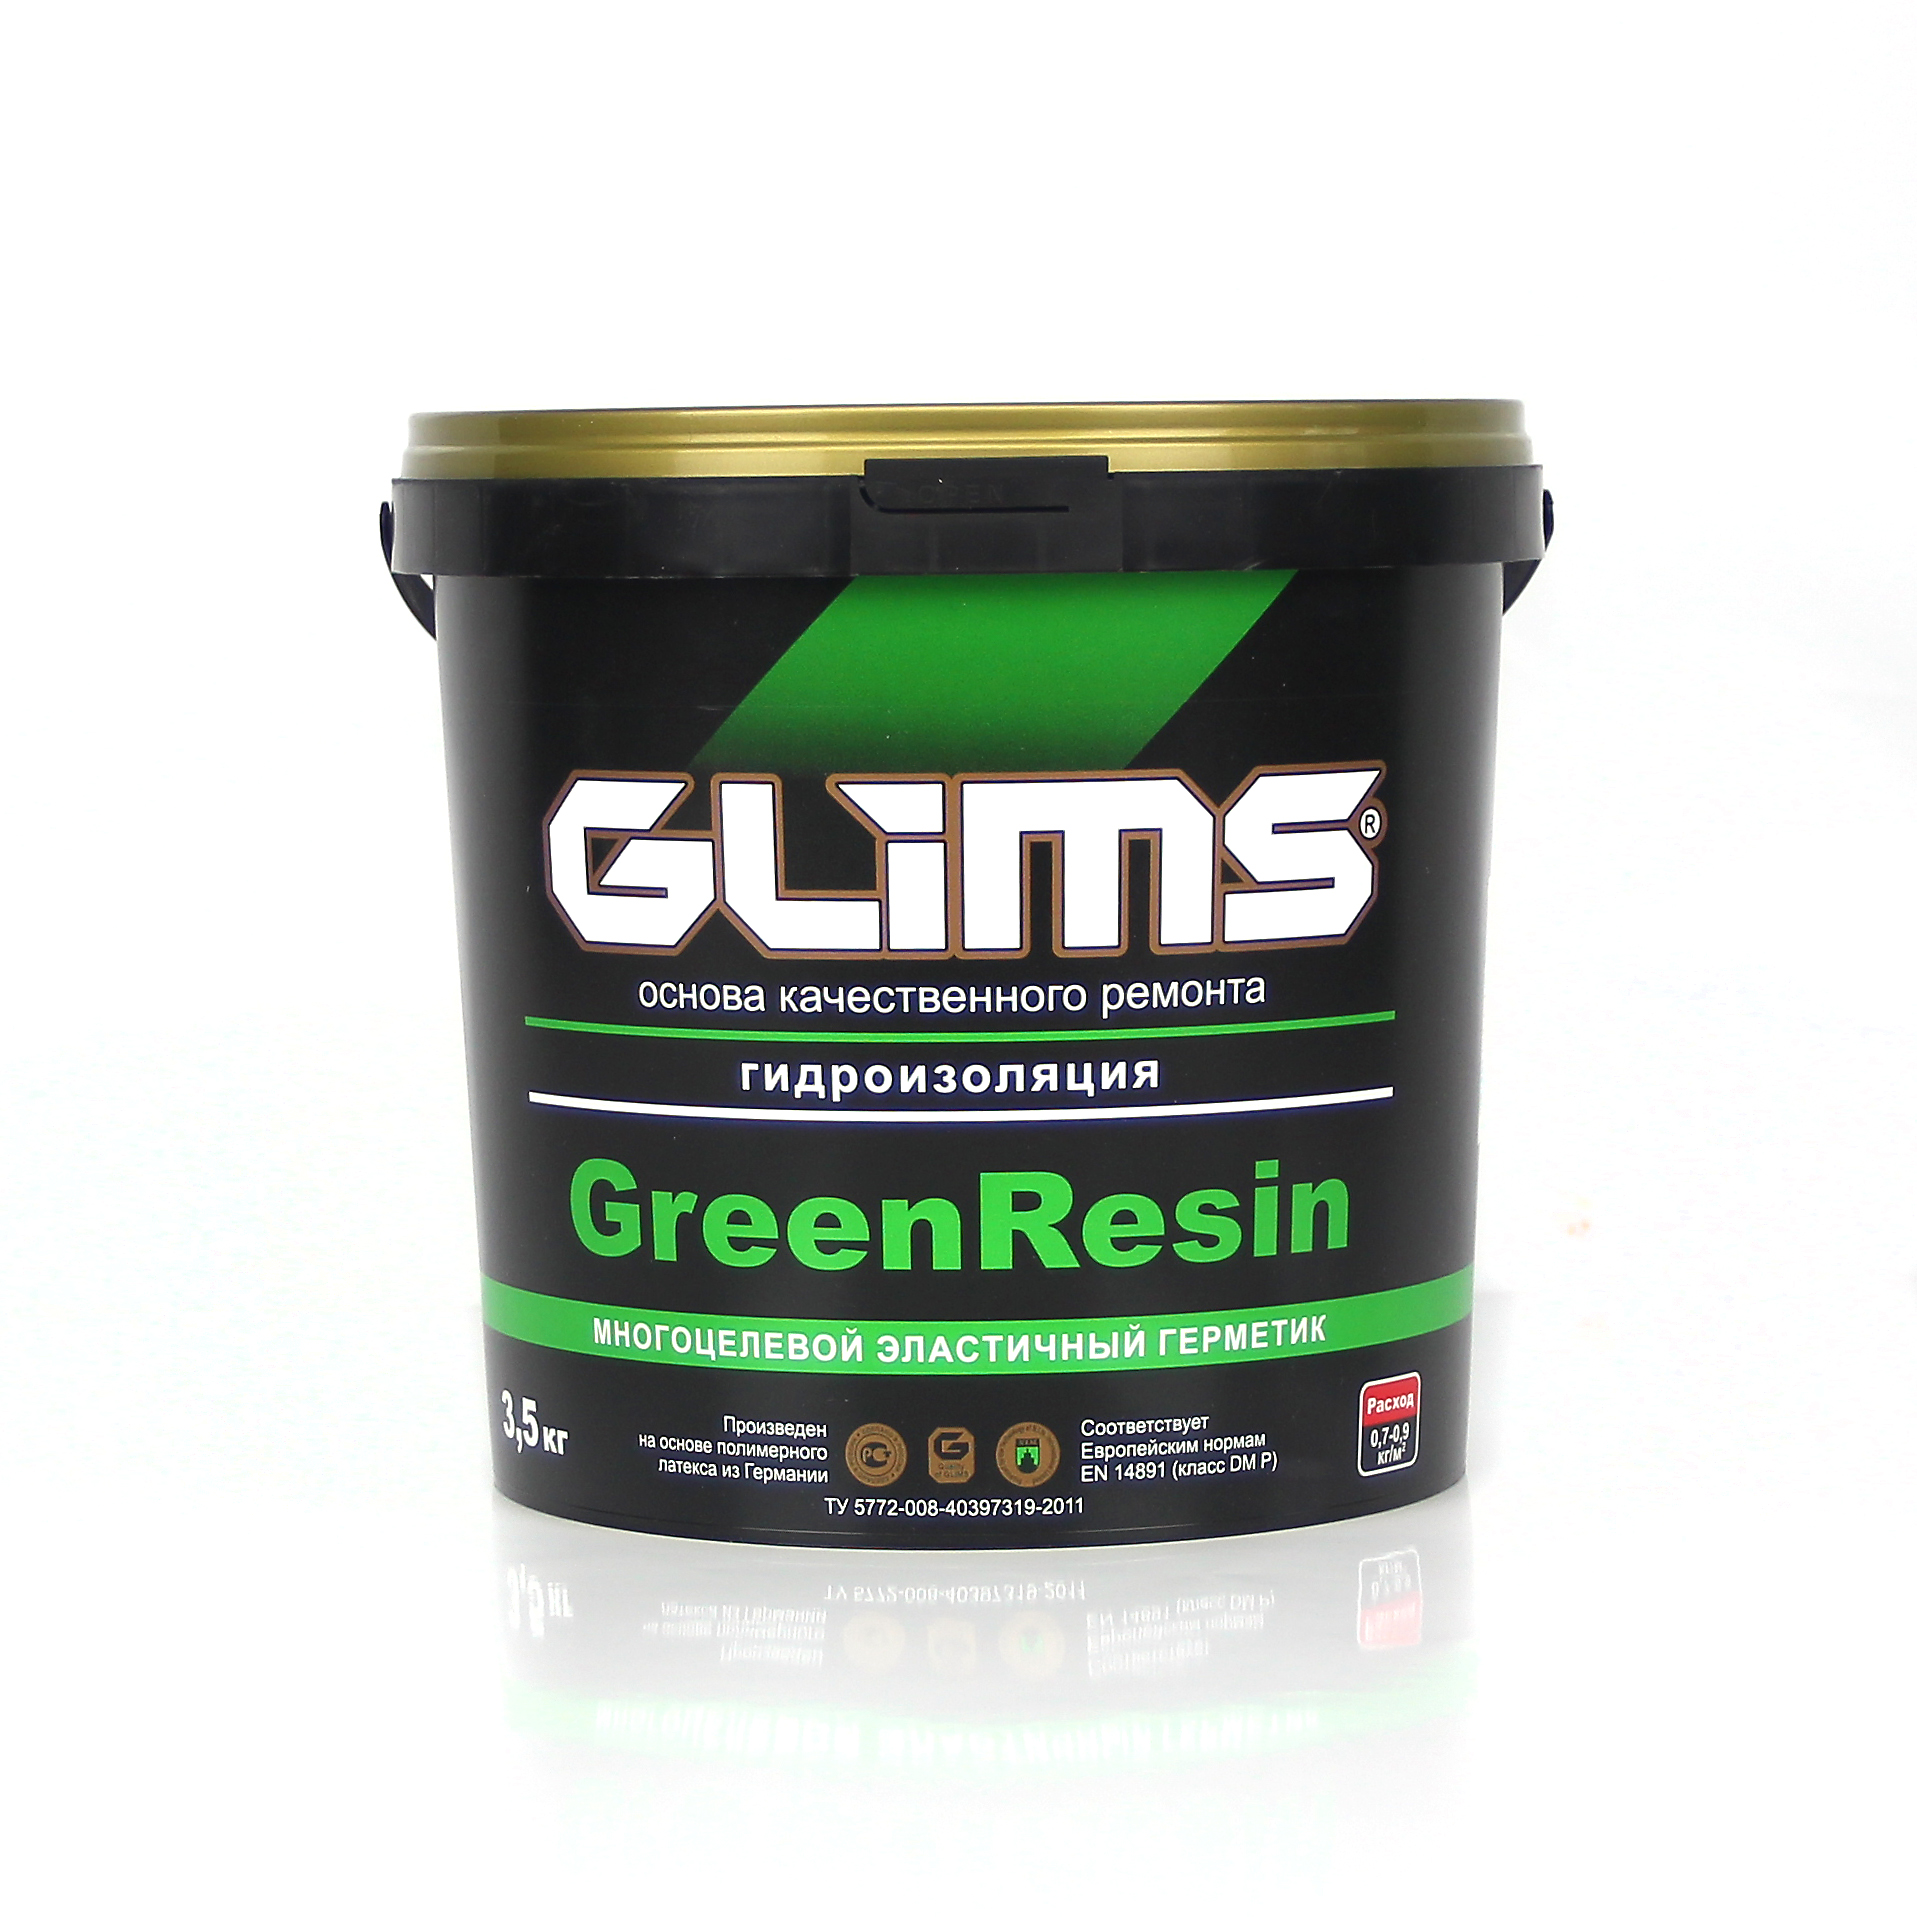 Гидроизоляция GLIMS GreenResin обмазочная на водной основе, 3.5 кг гидроизоляция эластичная glims greenresin 7 кг